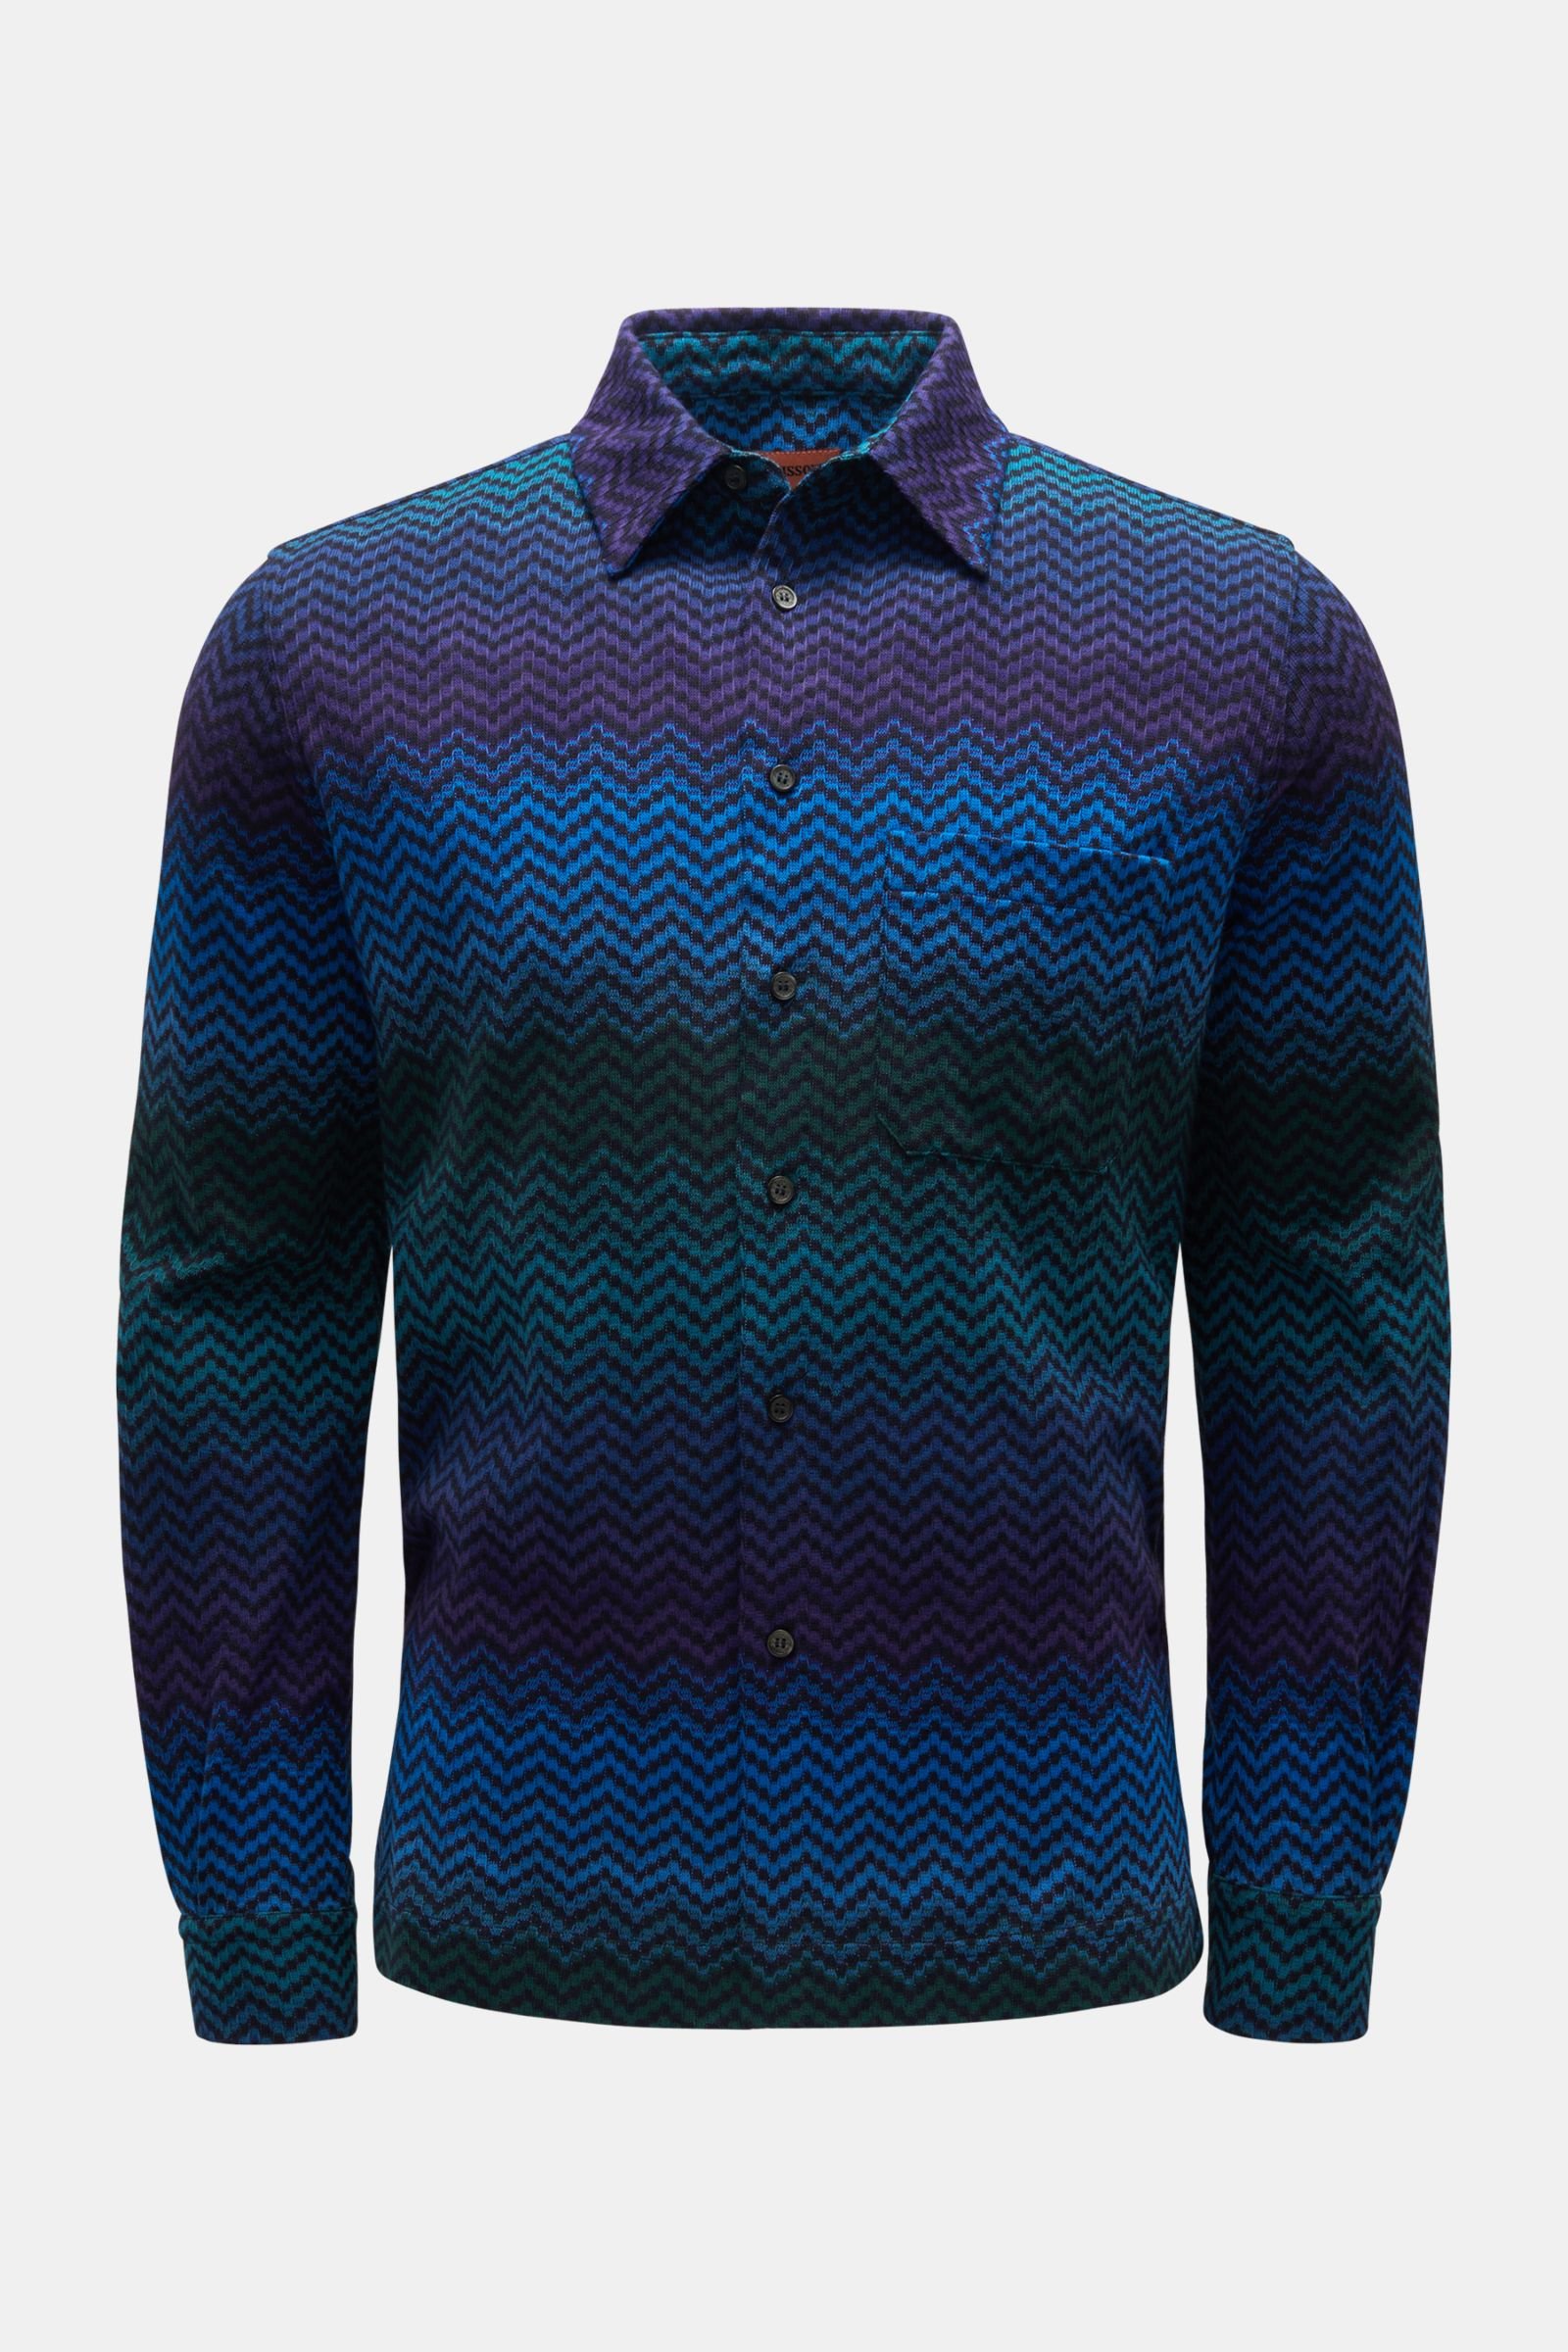 Knit shirt Kent collar purple/blue/dark green patterned